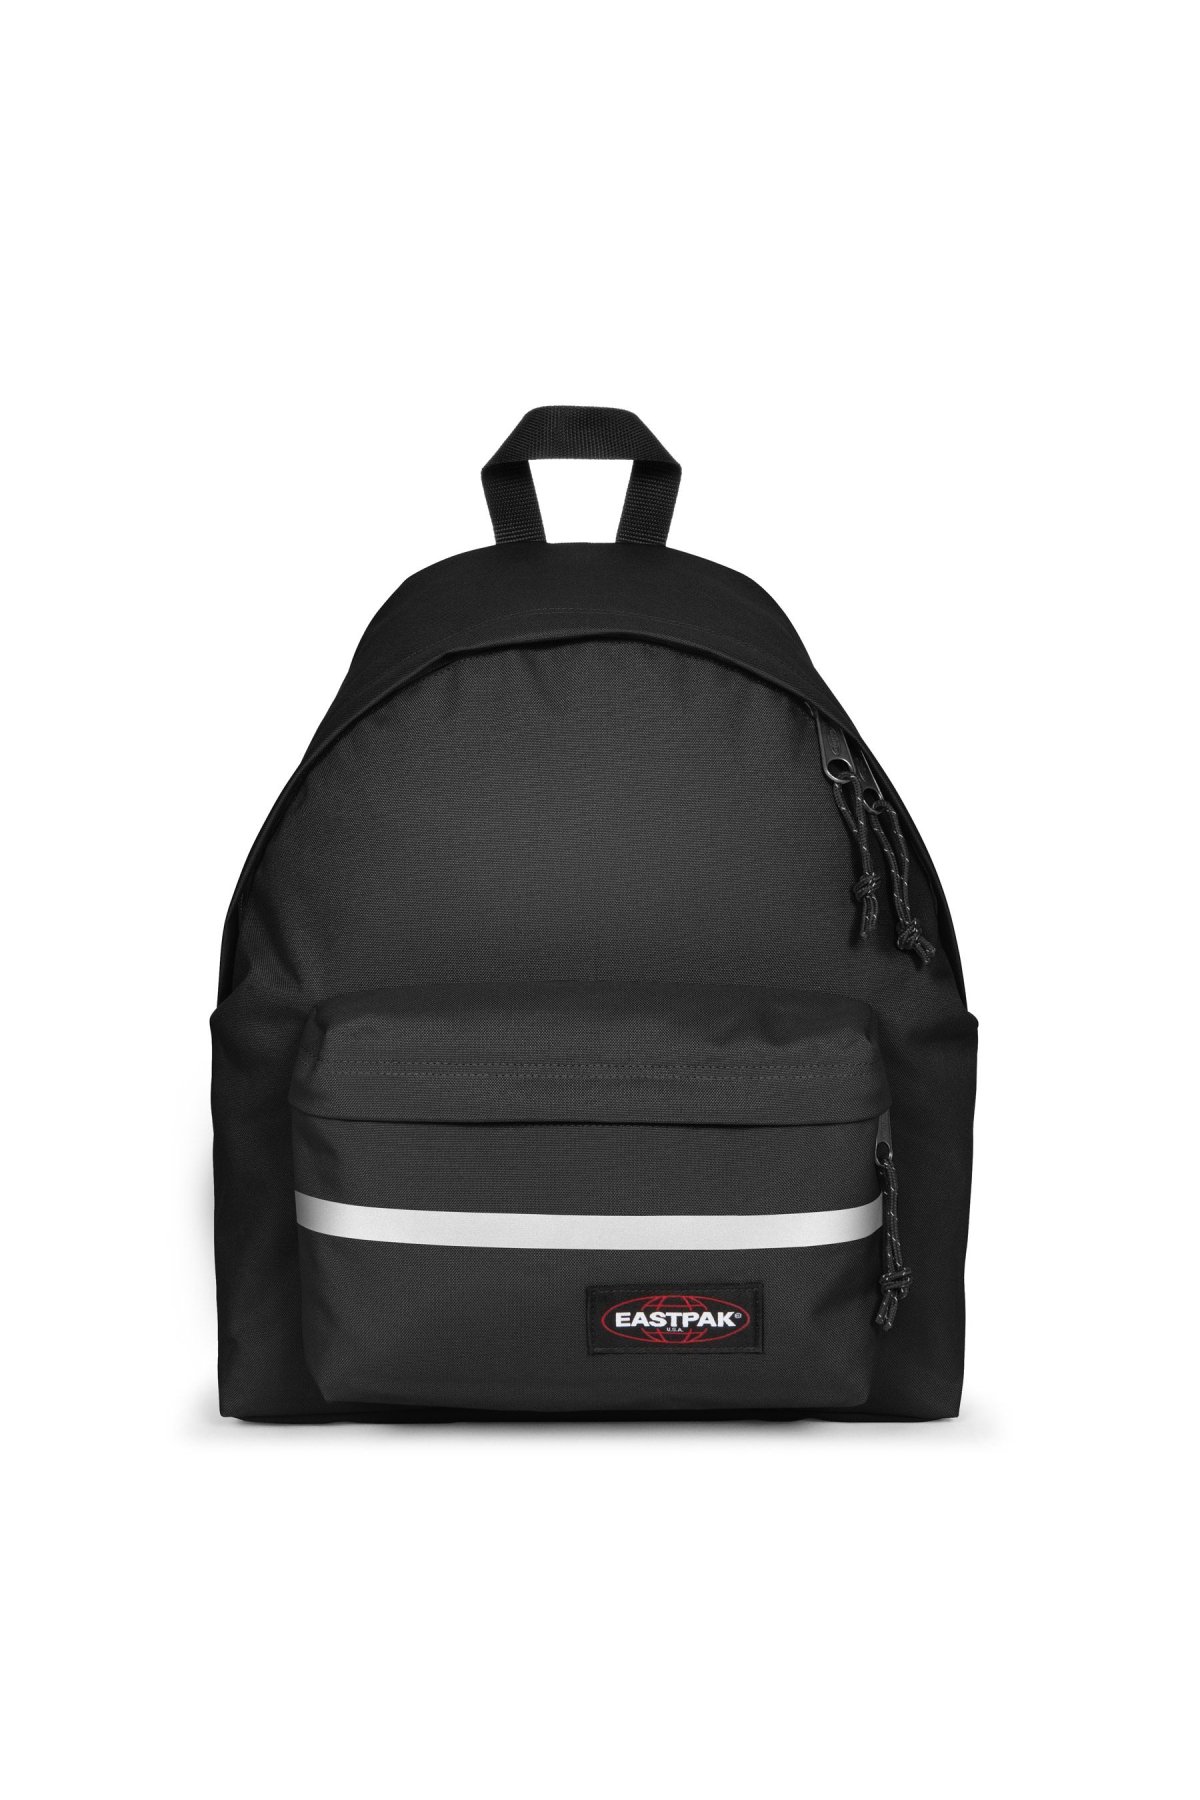 Eastpak EK0A5BBK0081 Backpack černý 21L